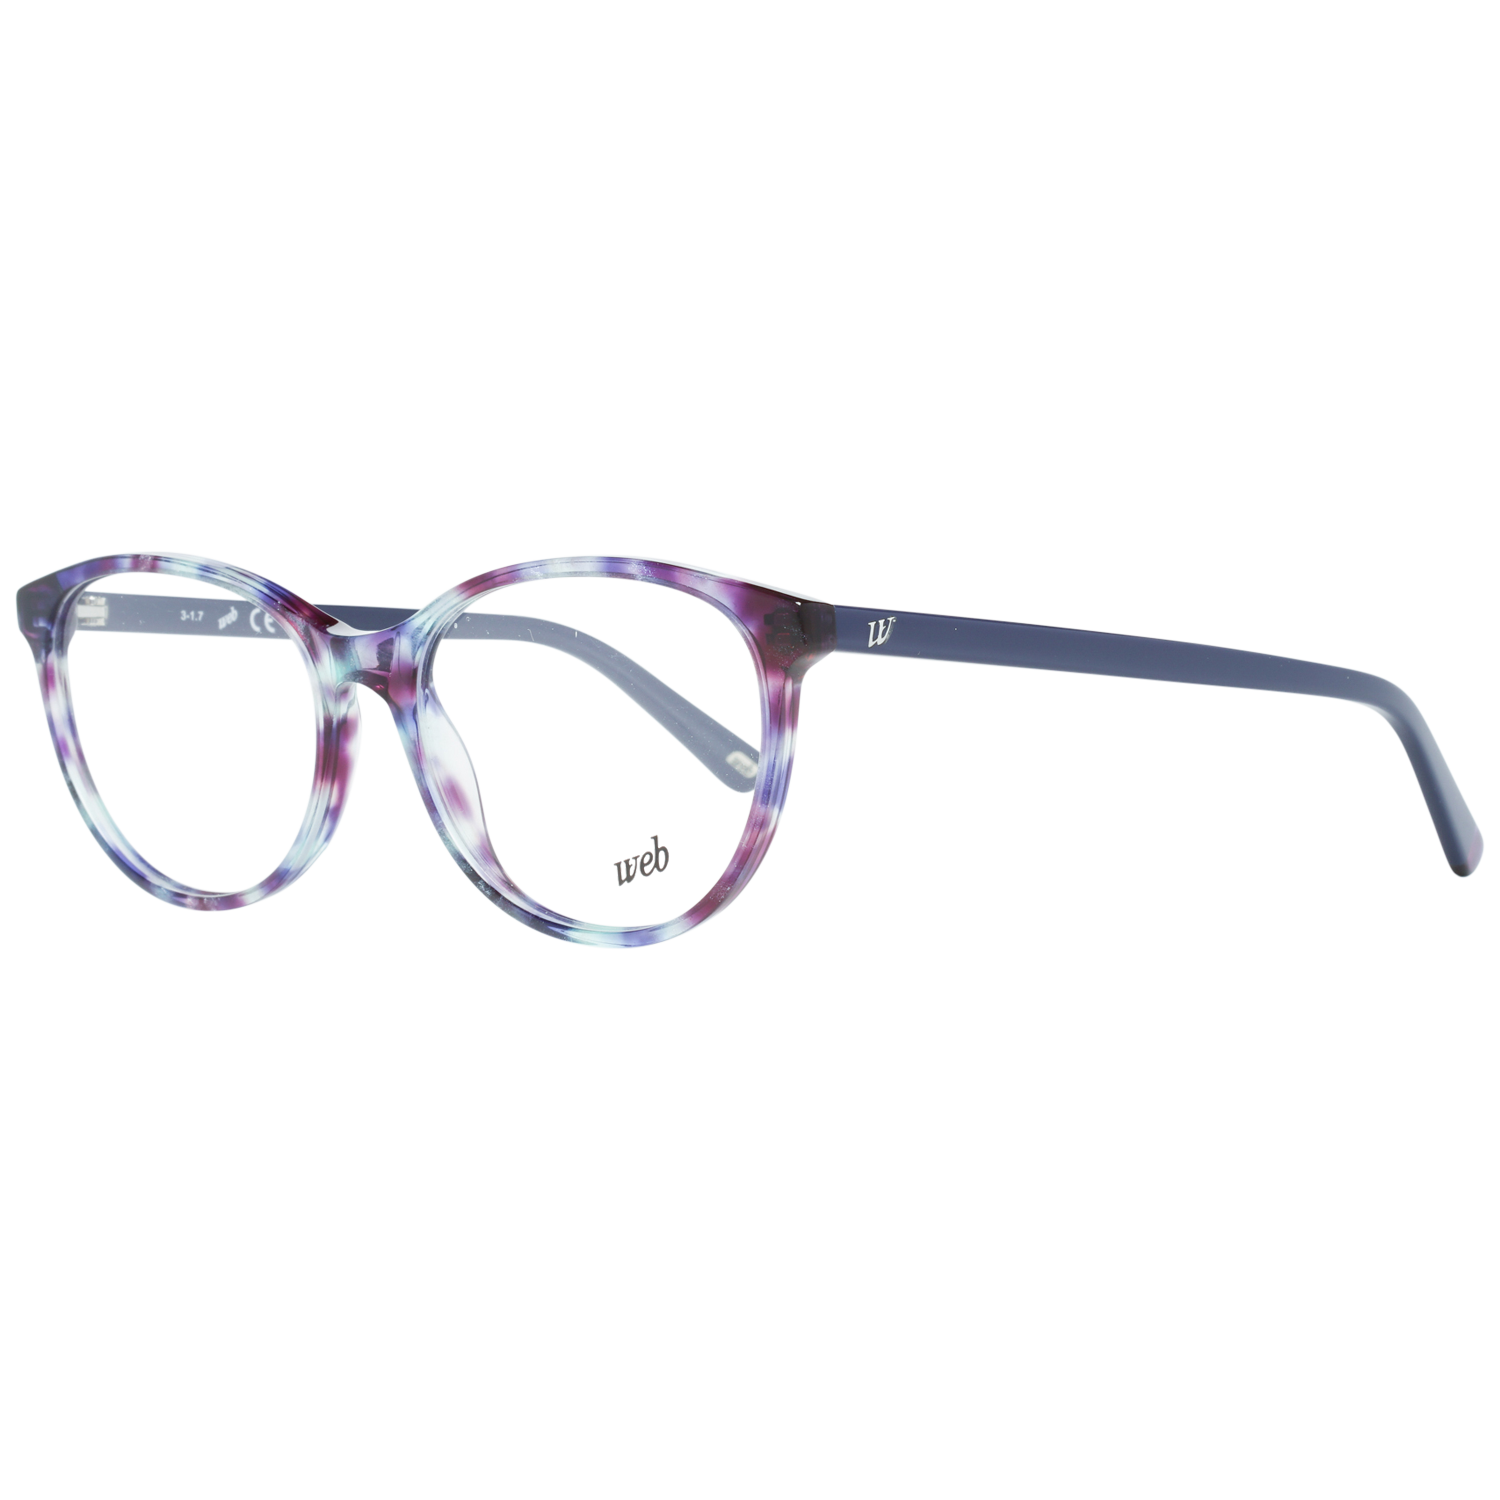 Web Frames Web Glasses Optical Frame WE5214 A55 54 Eyeglasses Eyewear UK USA Australia 